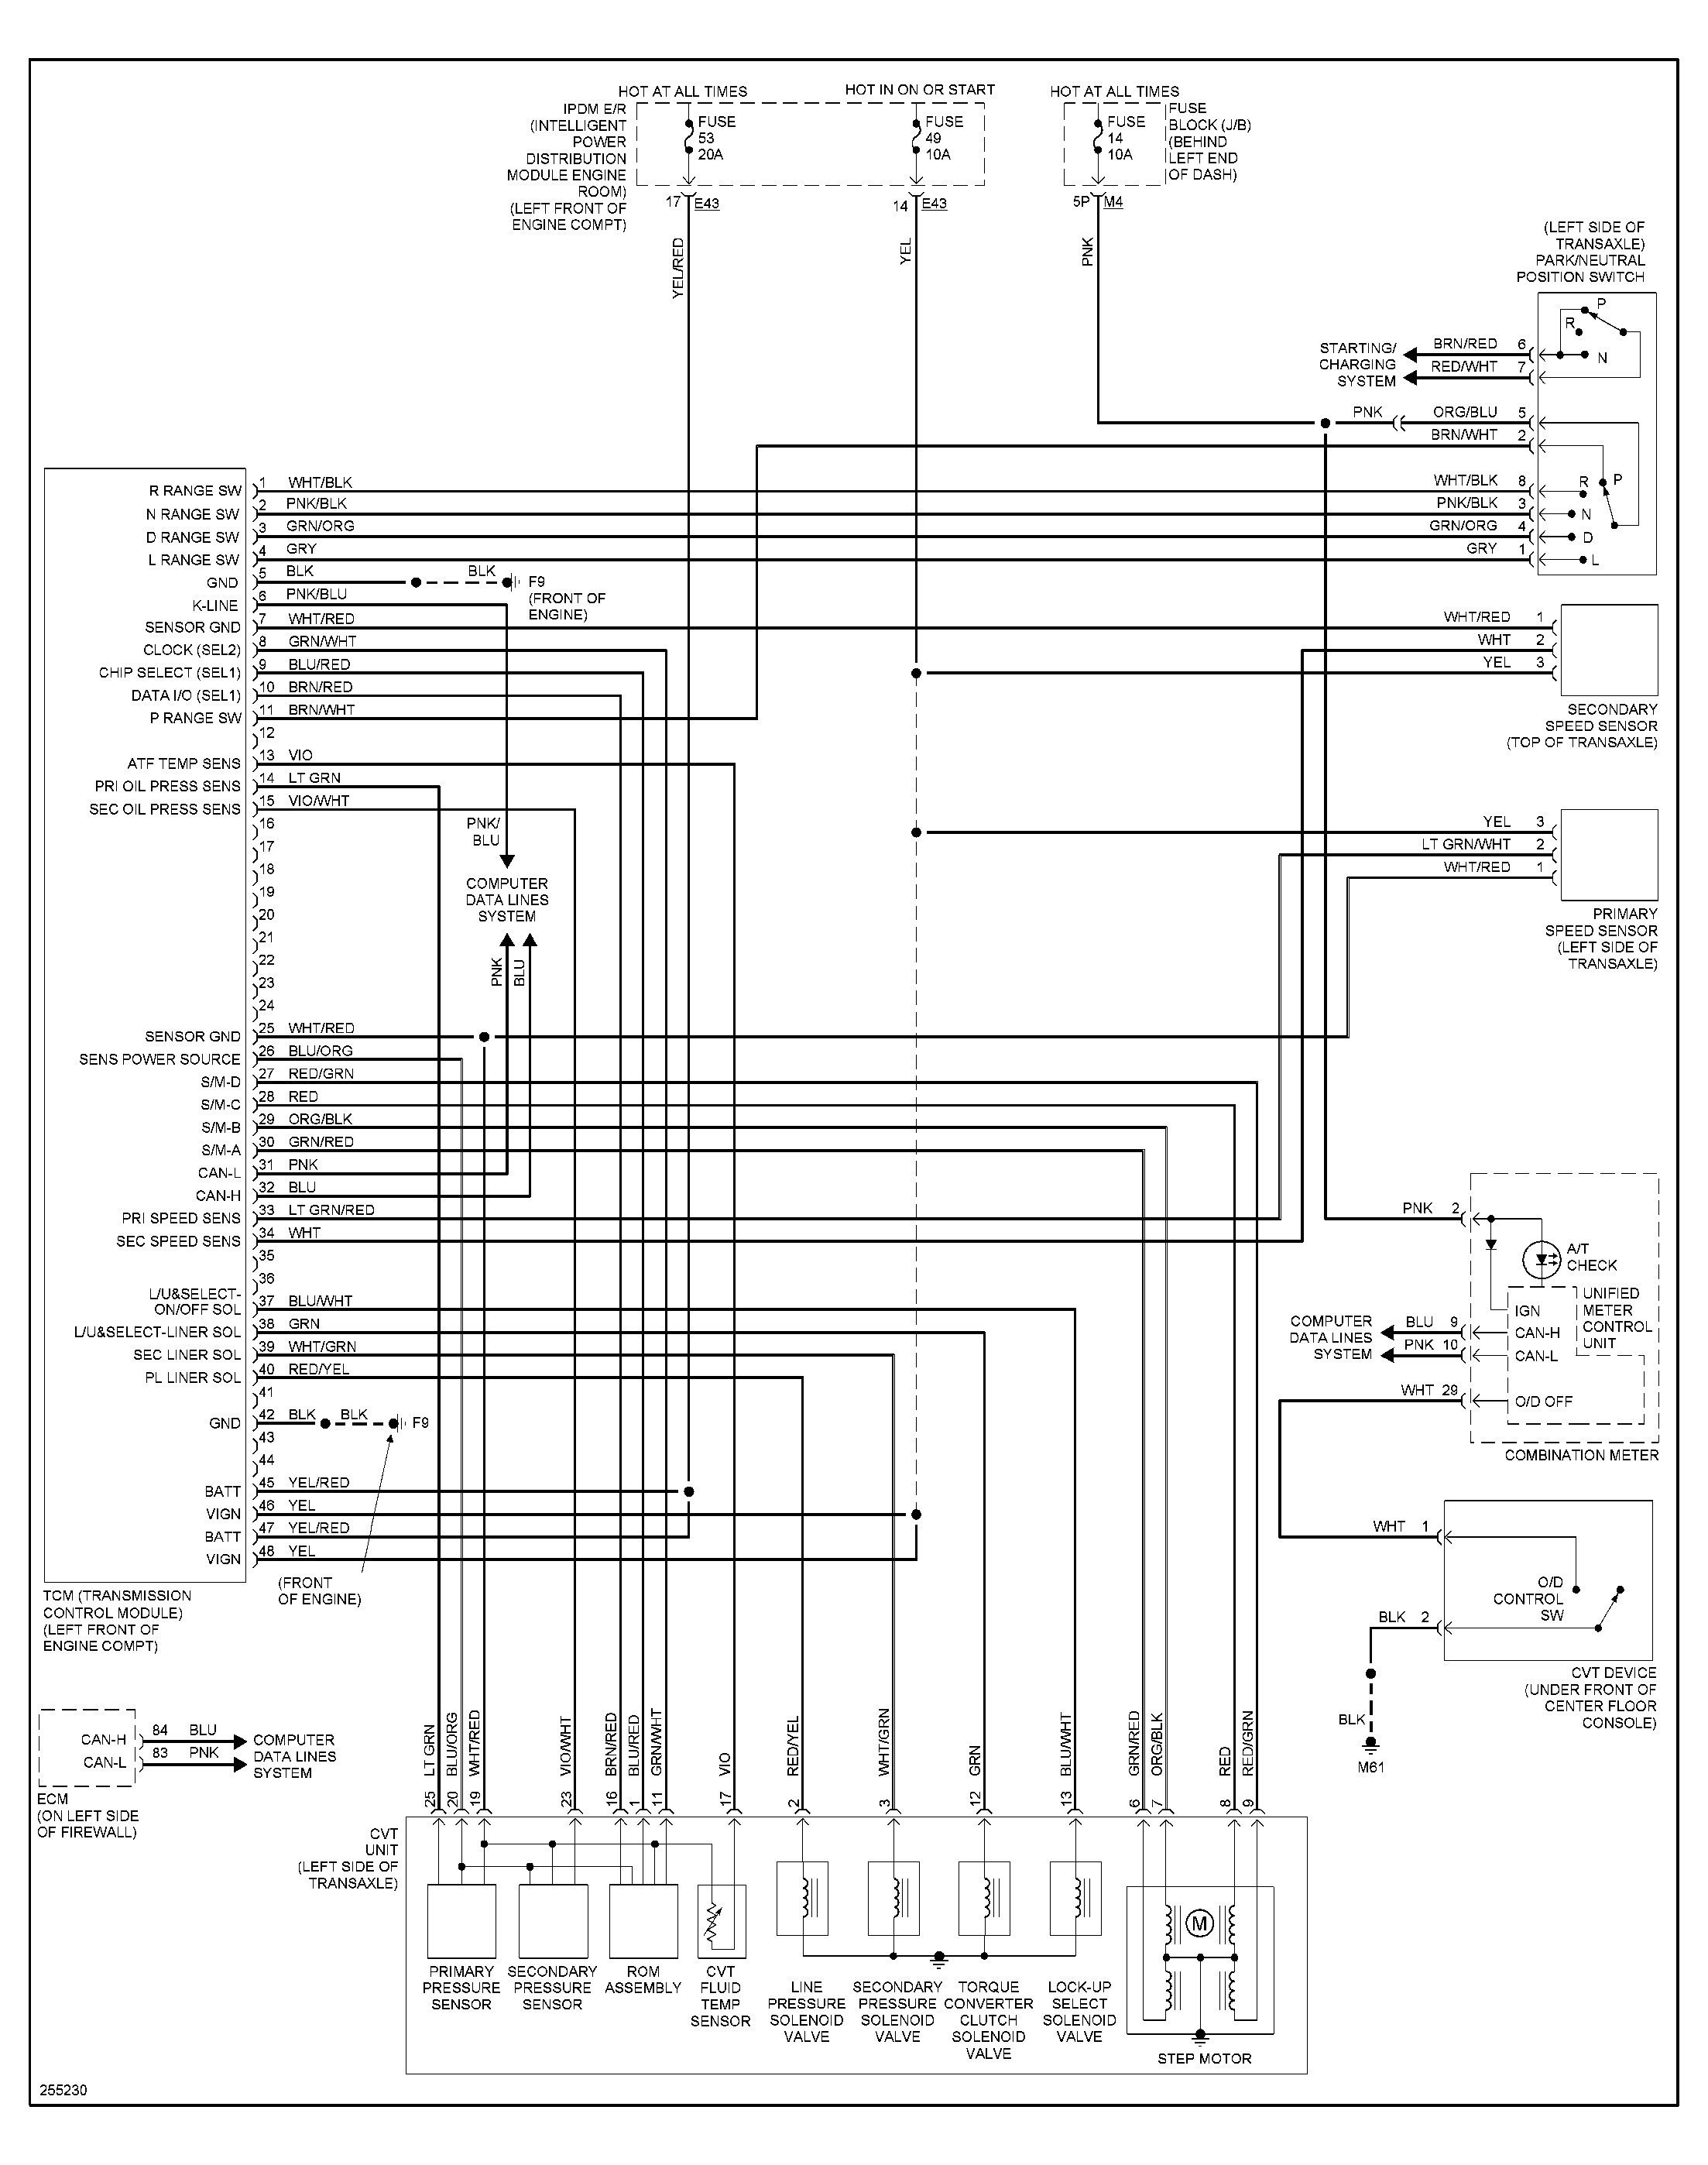 2000 Nissan Maxima Engine Diagram Nissan Maxima Wiring Diagram Manual Of 2000 Nissan Maxima Engine Diagram